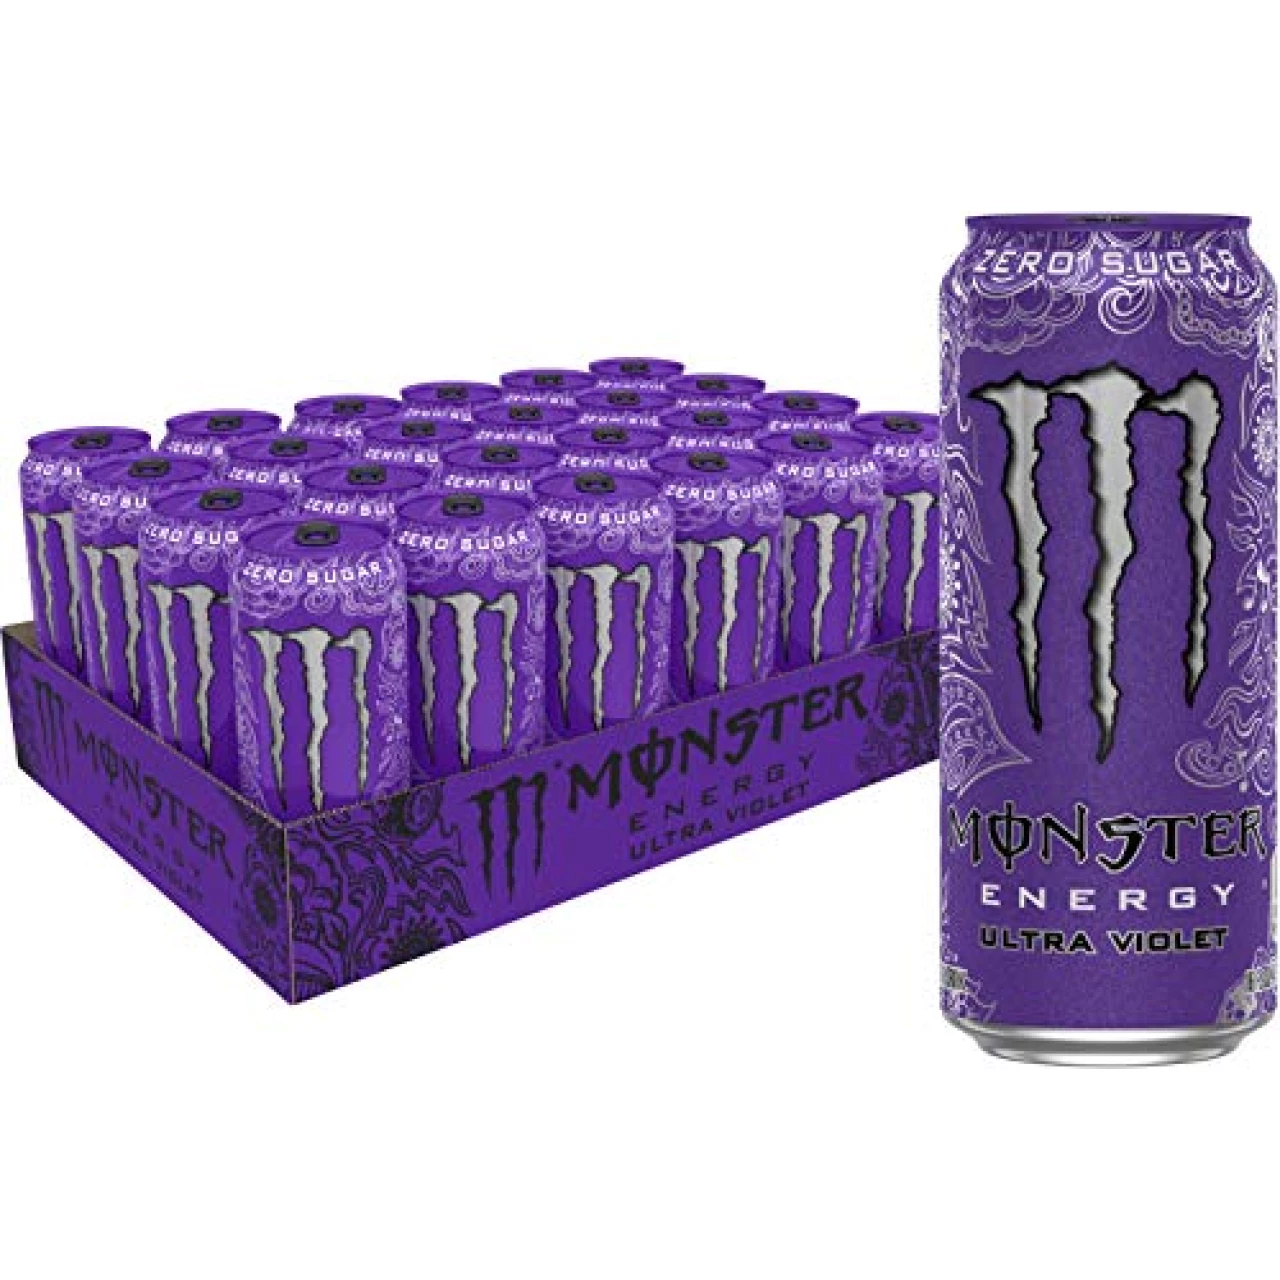 Monster Energy Ultra Violet, Sugar Free Energy Drink, 16 Fl Oz (Pack of 24)